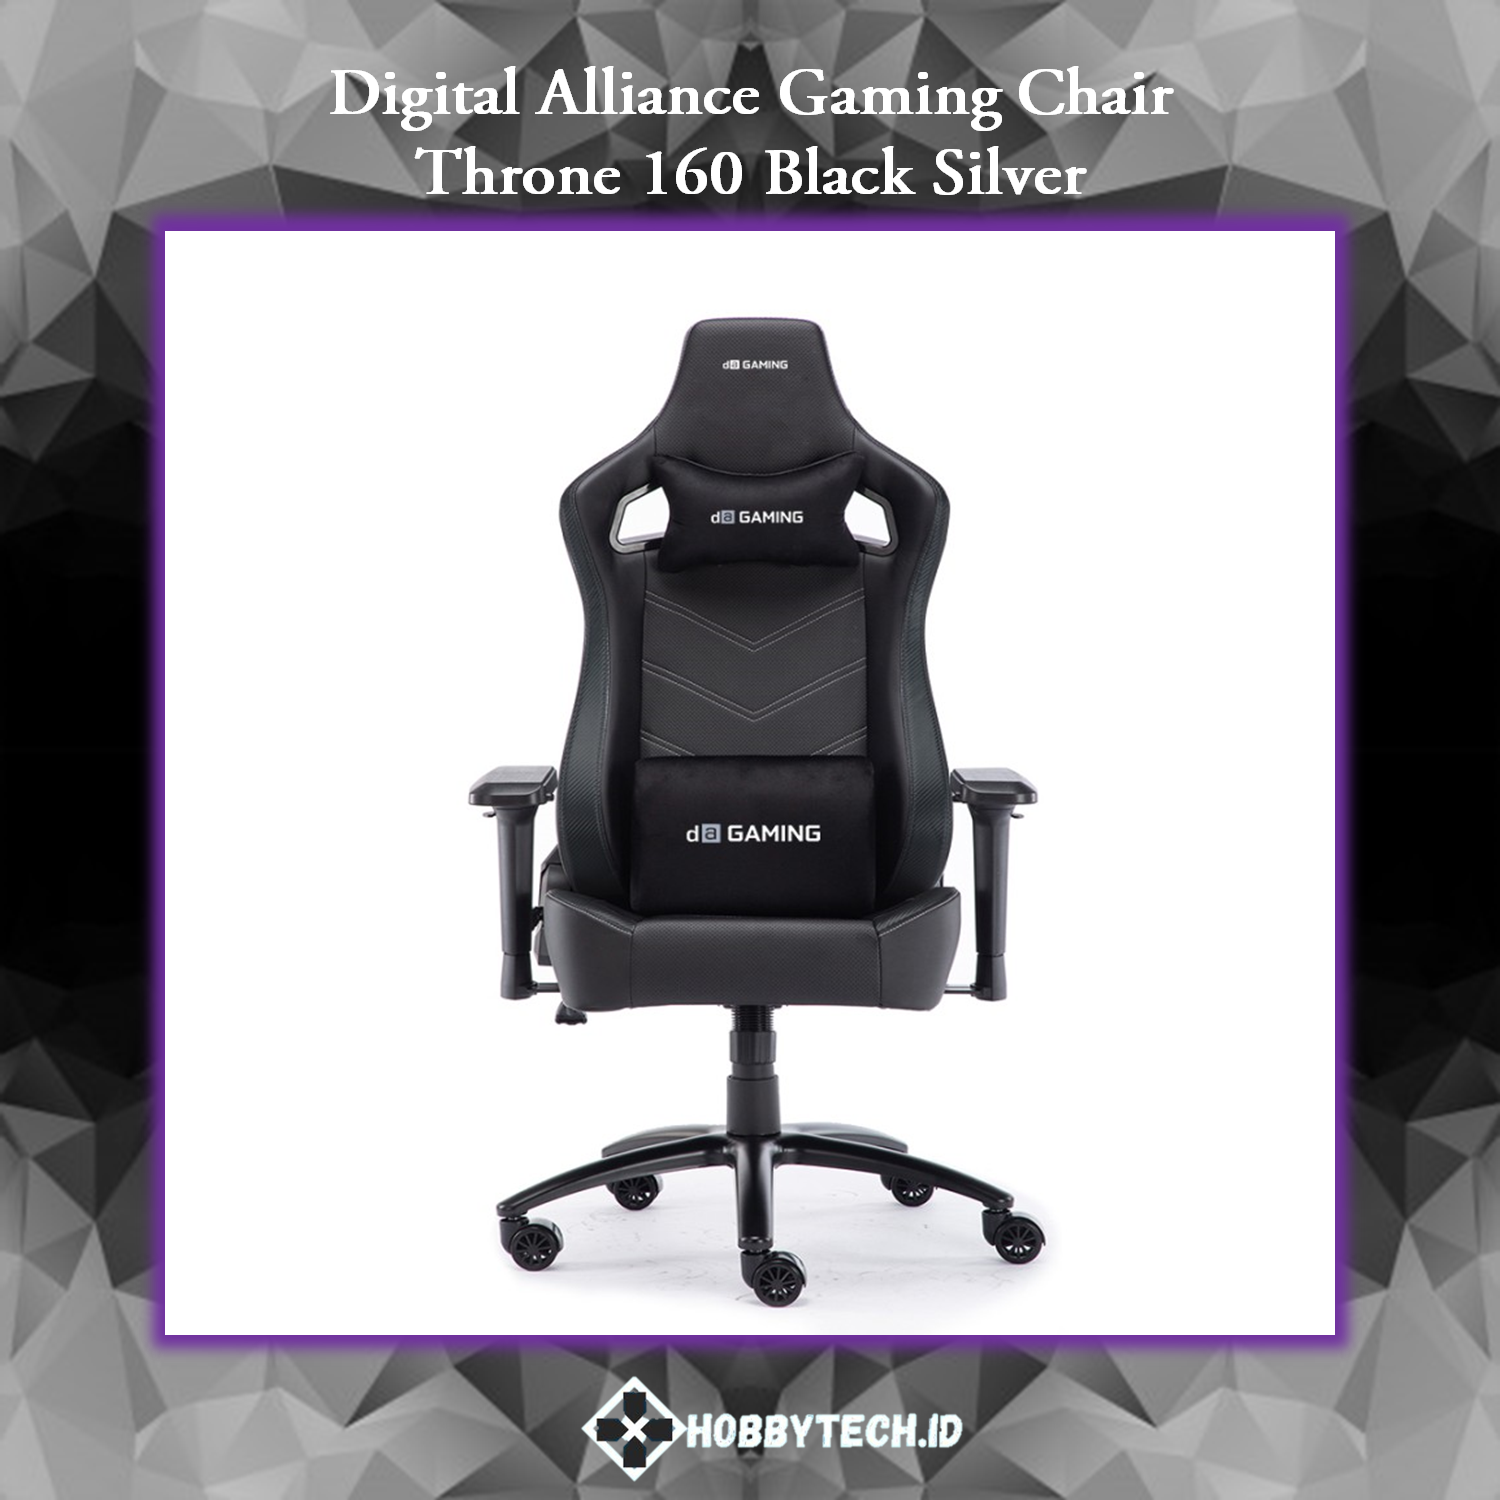 Digital Alliance Gaming Chair Throne 160 Black Silver